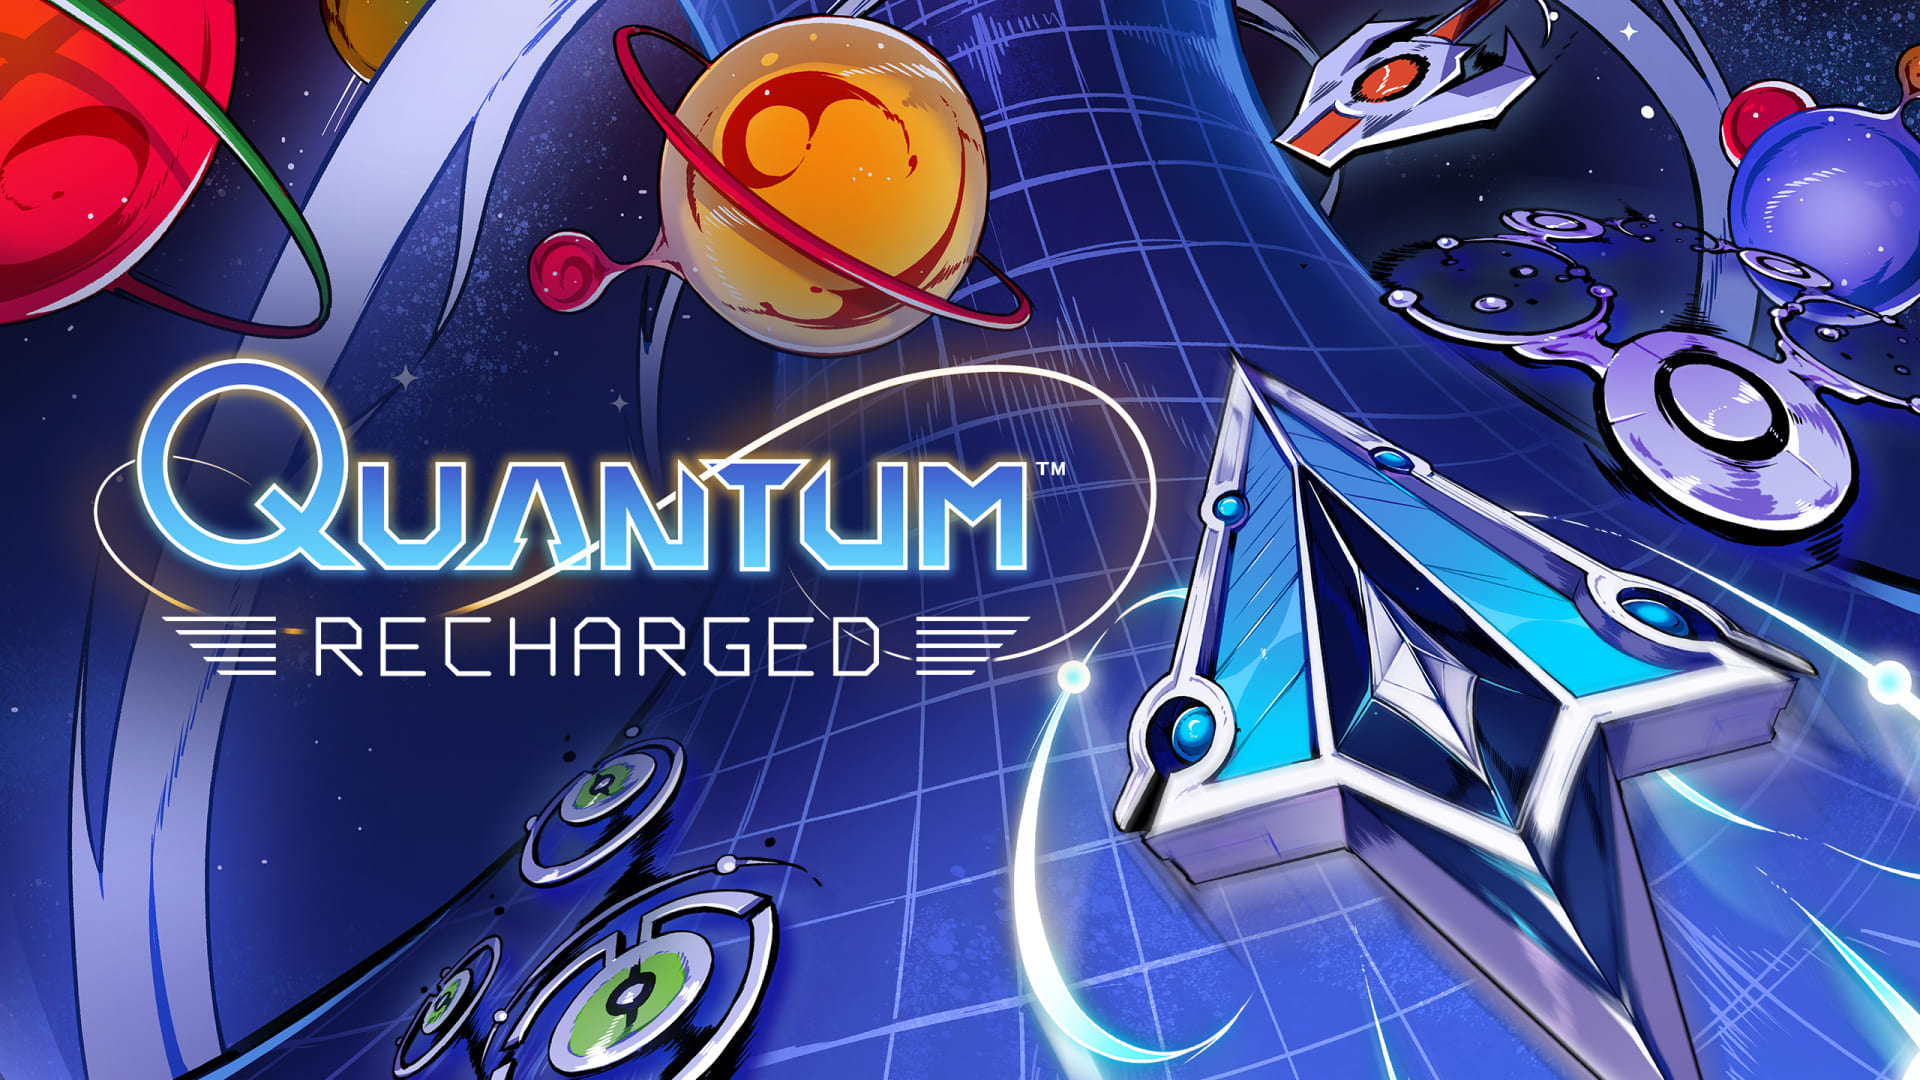 Quantum: Recharged 1